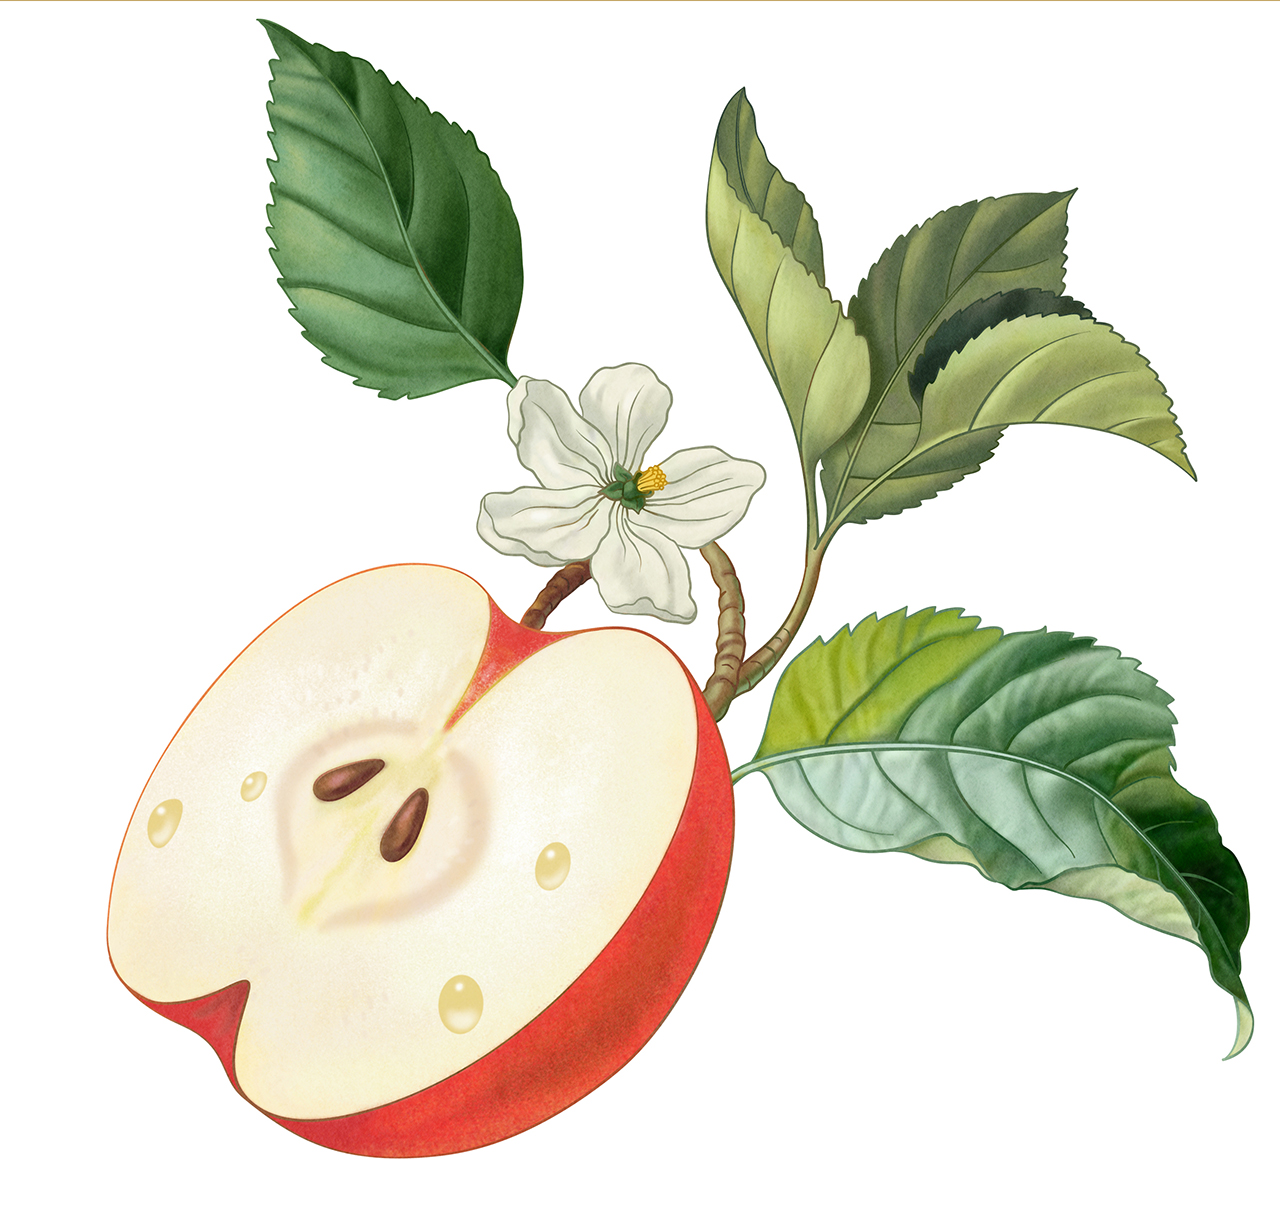 Illustration for a label apple and ginger.